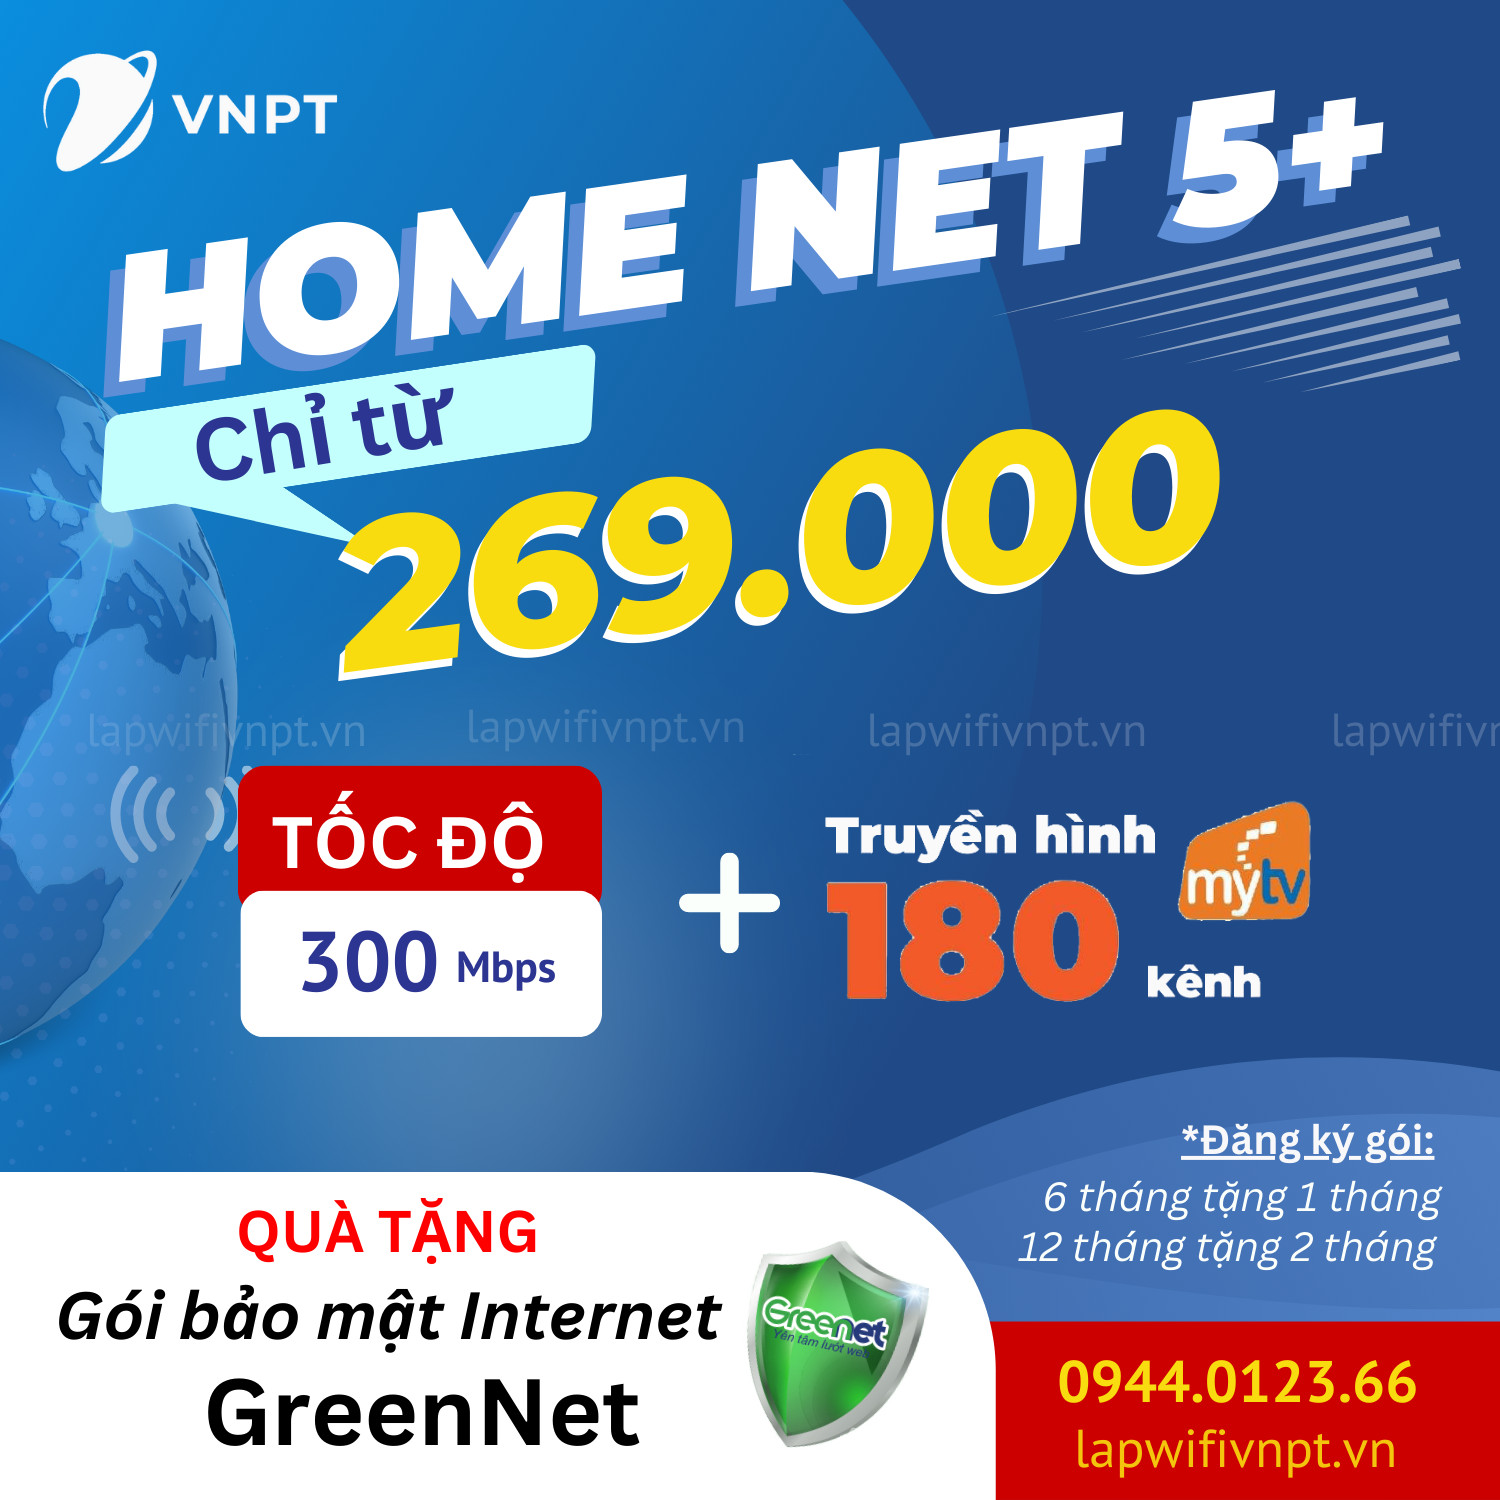 Goi Cuoc Home Net 5 Plus Vnpt, net 5+, net 5+ vnpt, gói home net 5+ vnpt, home net 5 plus